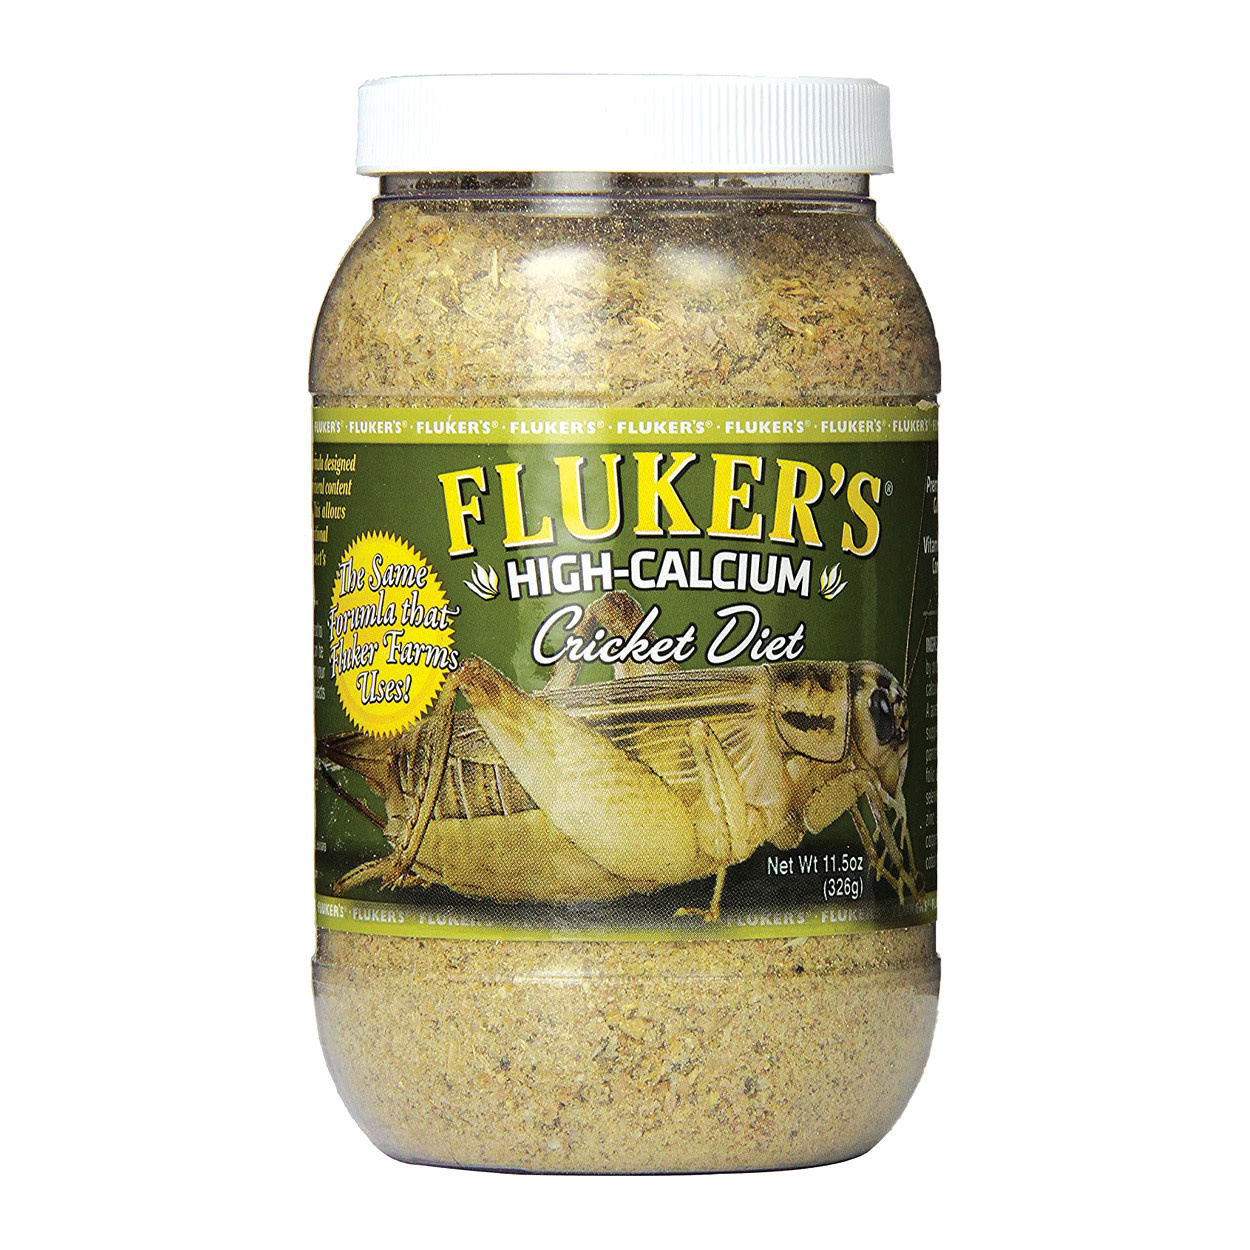 Fluker's  High-Calcium Cricket Diet - 11.5 oz